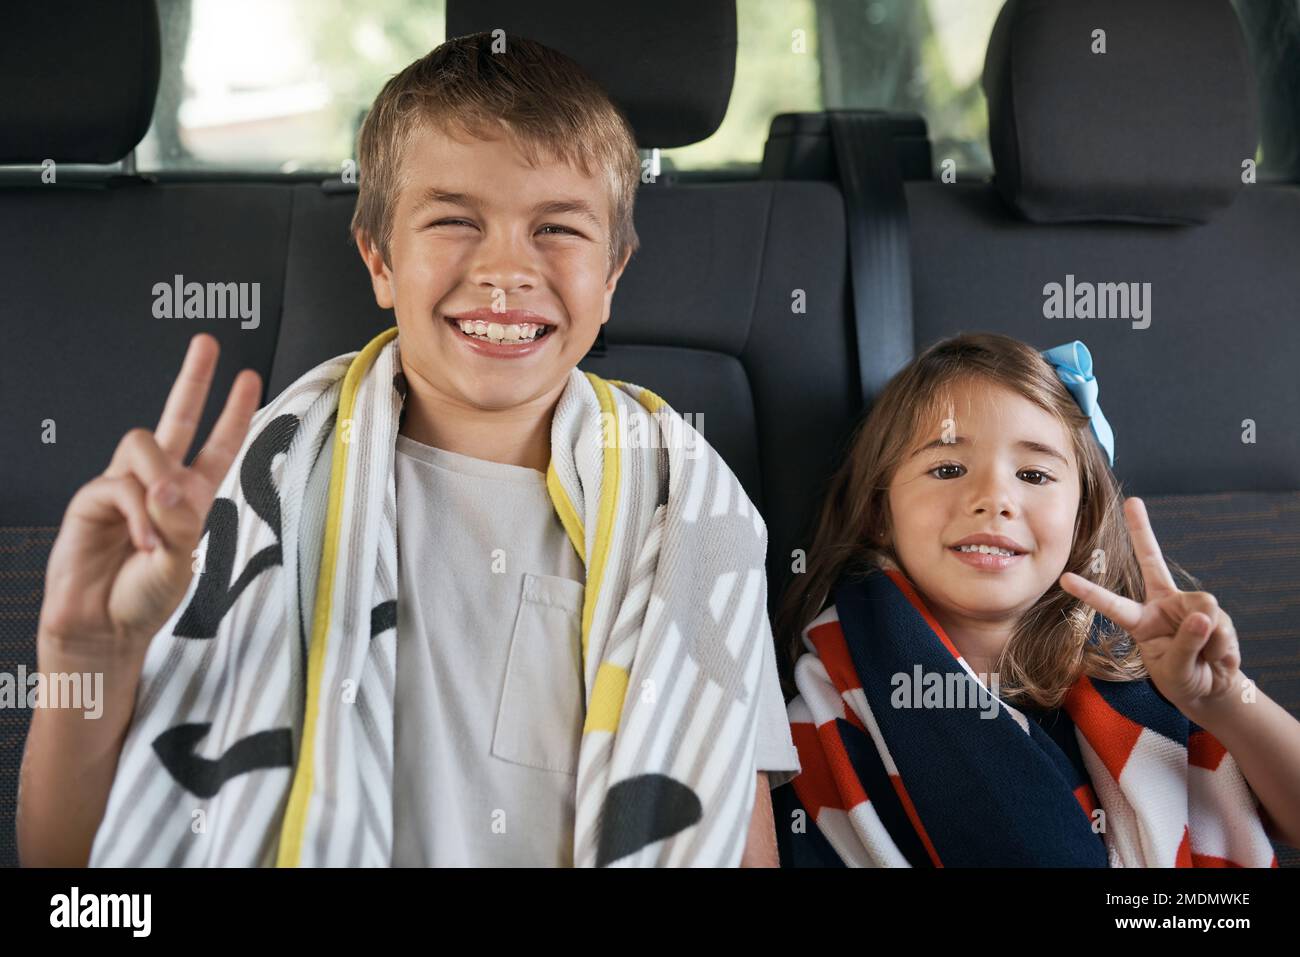 Siblings car -Fotos und -Bildmaterial in hoher Auflösung – Alamy